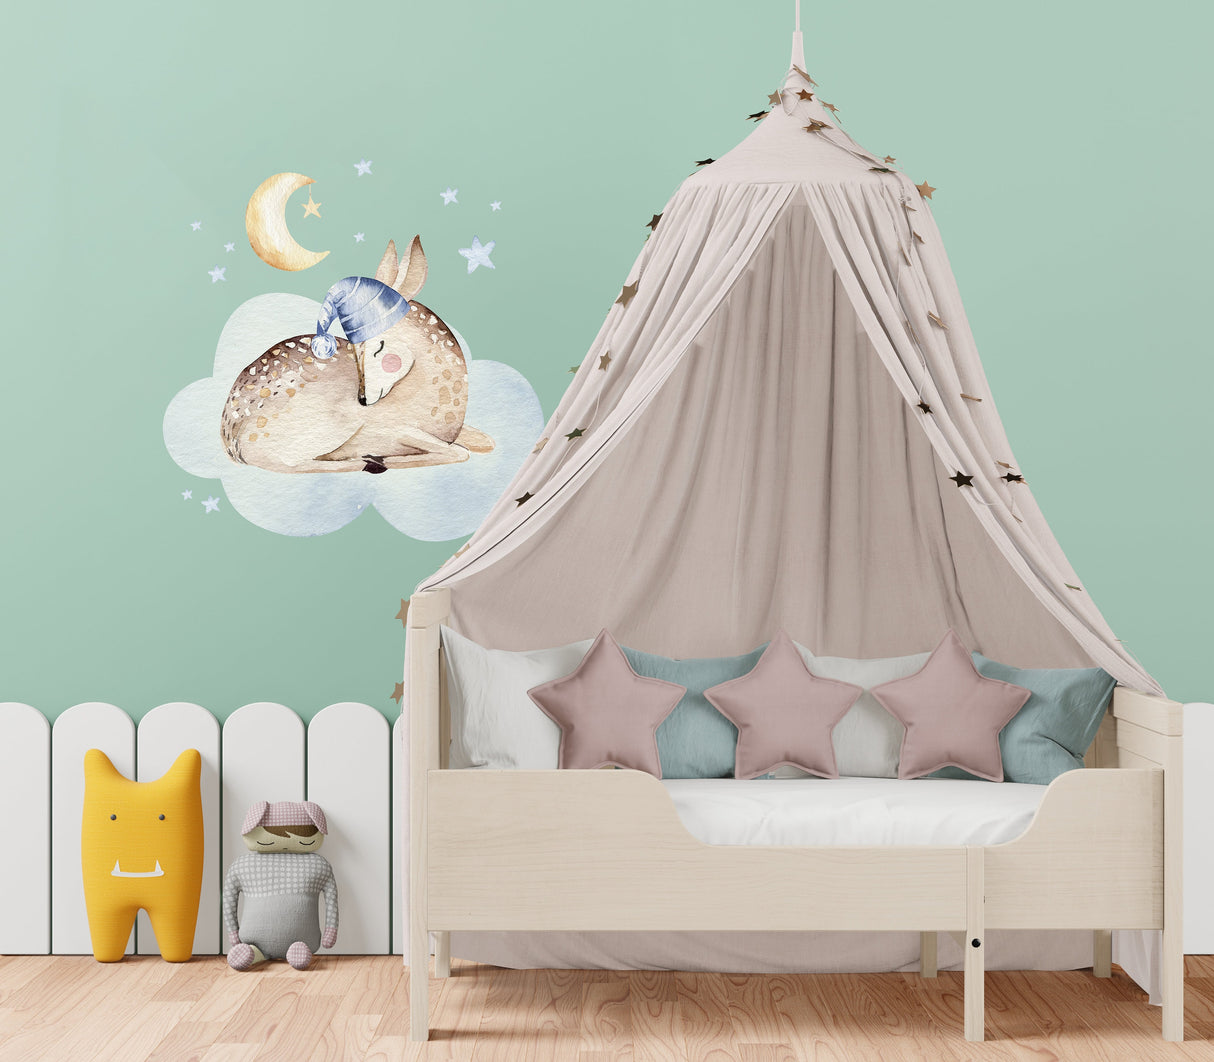 Baby Nursery Wall Decor Sticker - Cloud Moon Star Dream Animal Decal For Boy Girl Room